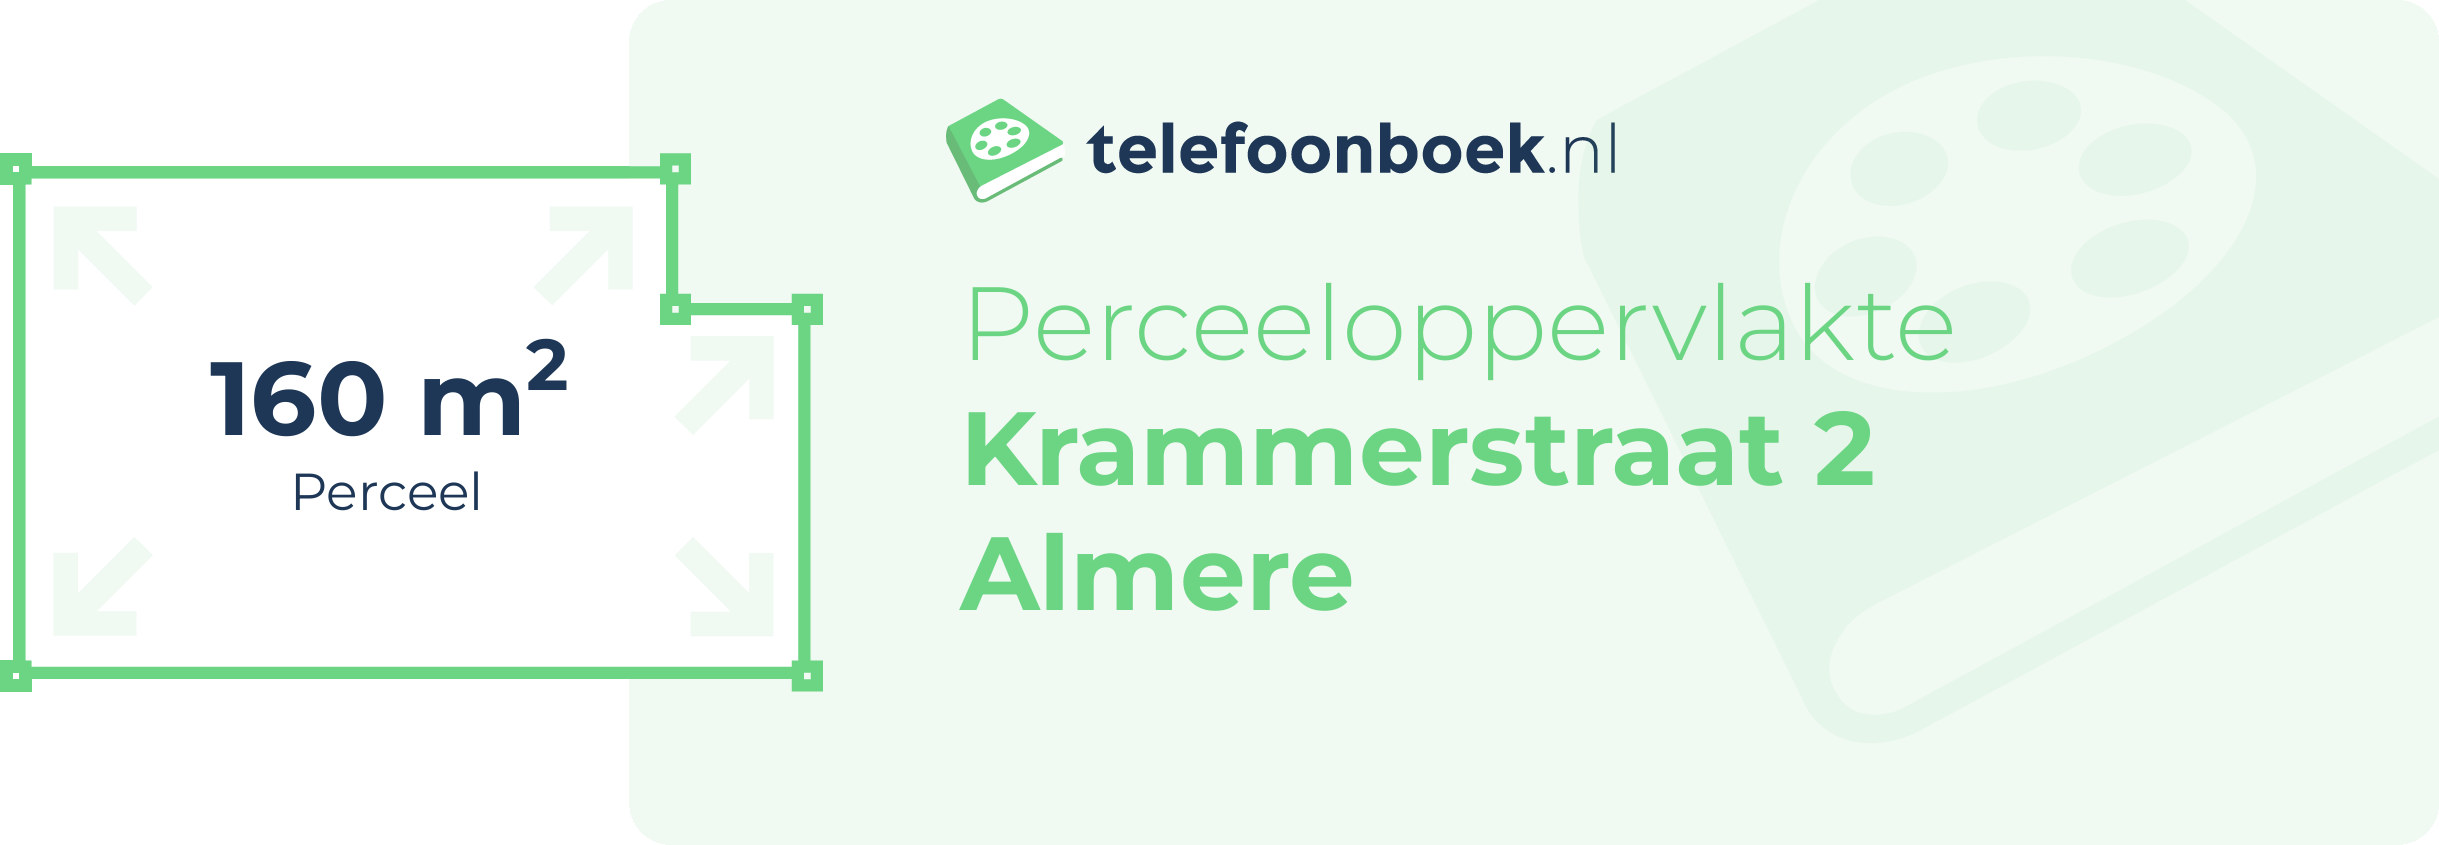 Perceeloppervlakte Krammerstraat 2 Almere